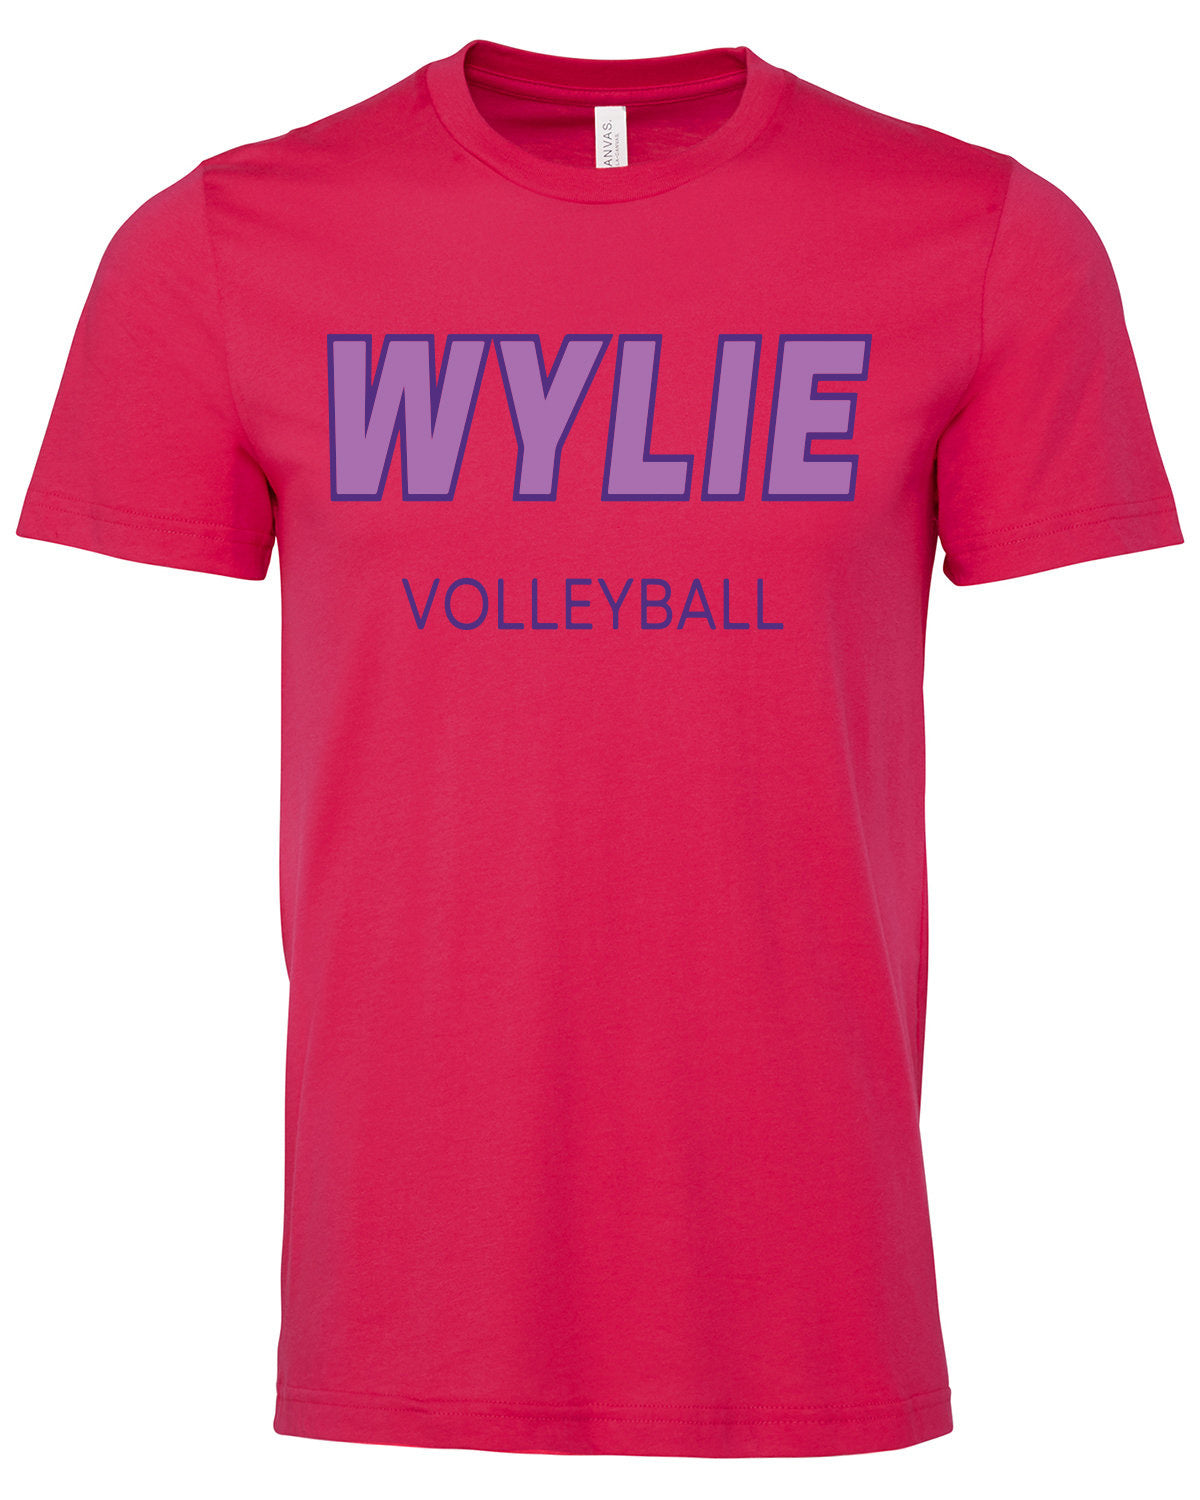 Wylie Volleyball - Summer Tee